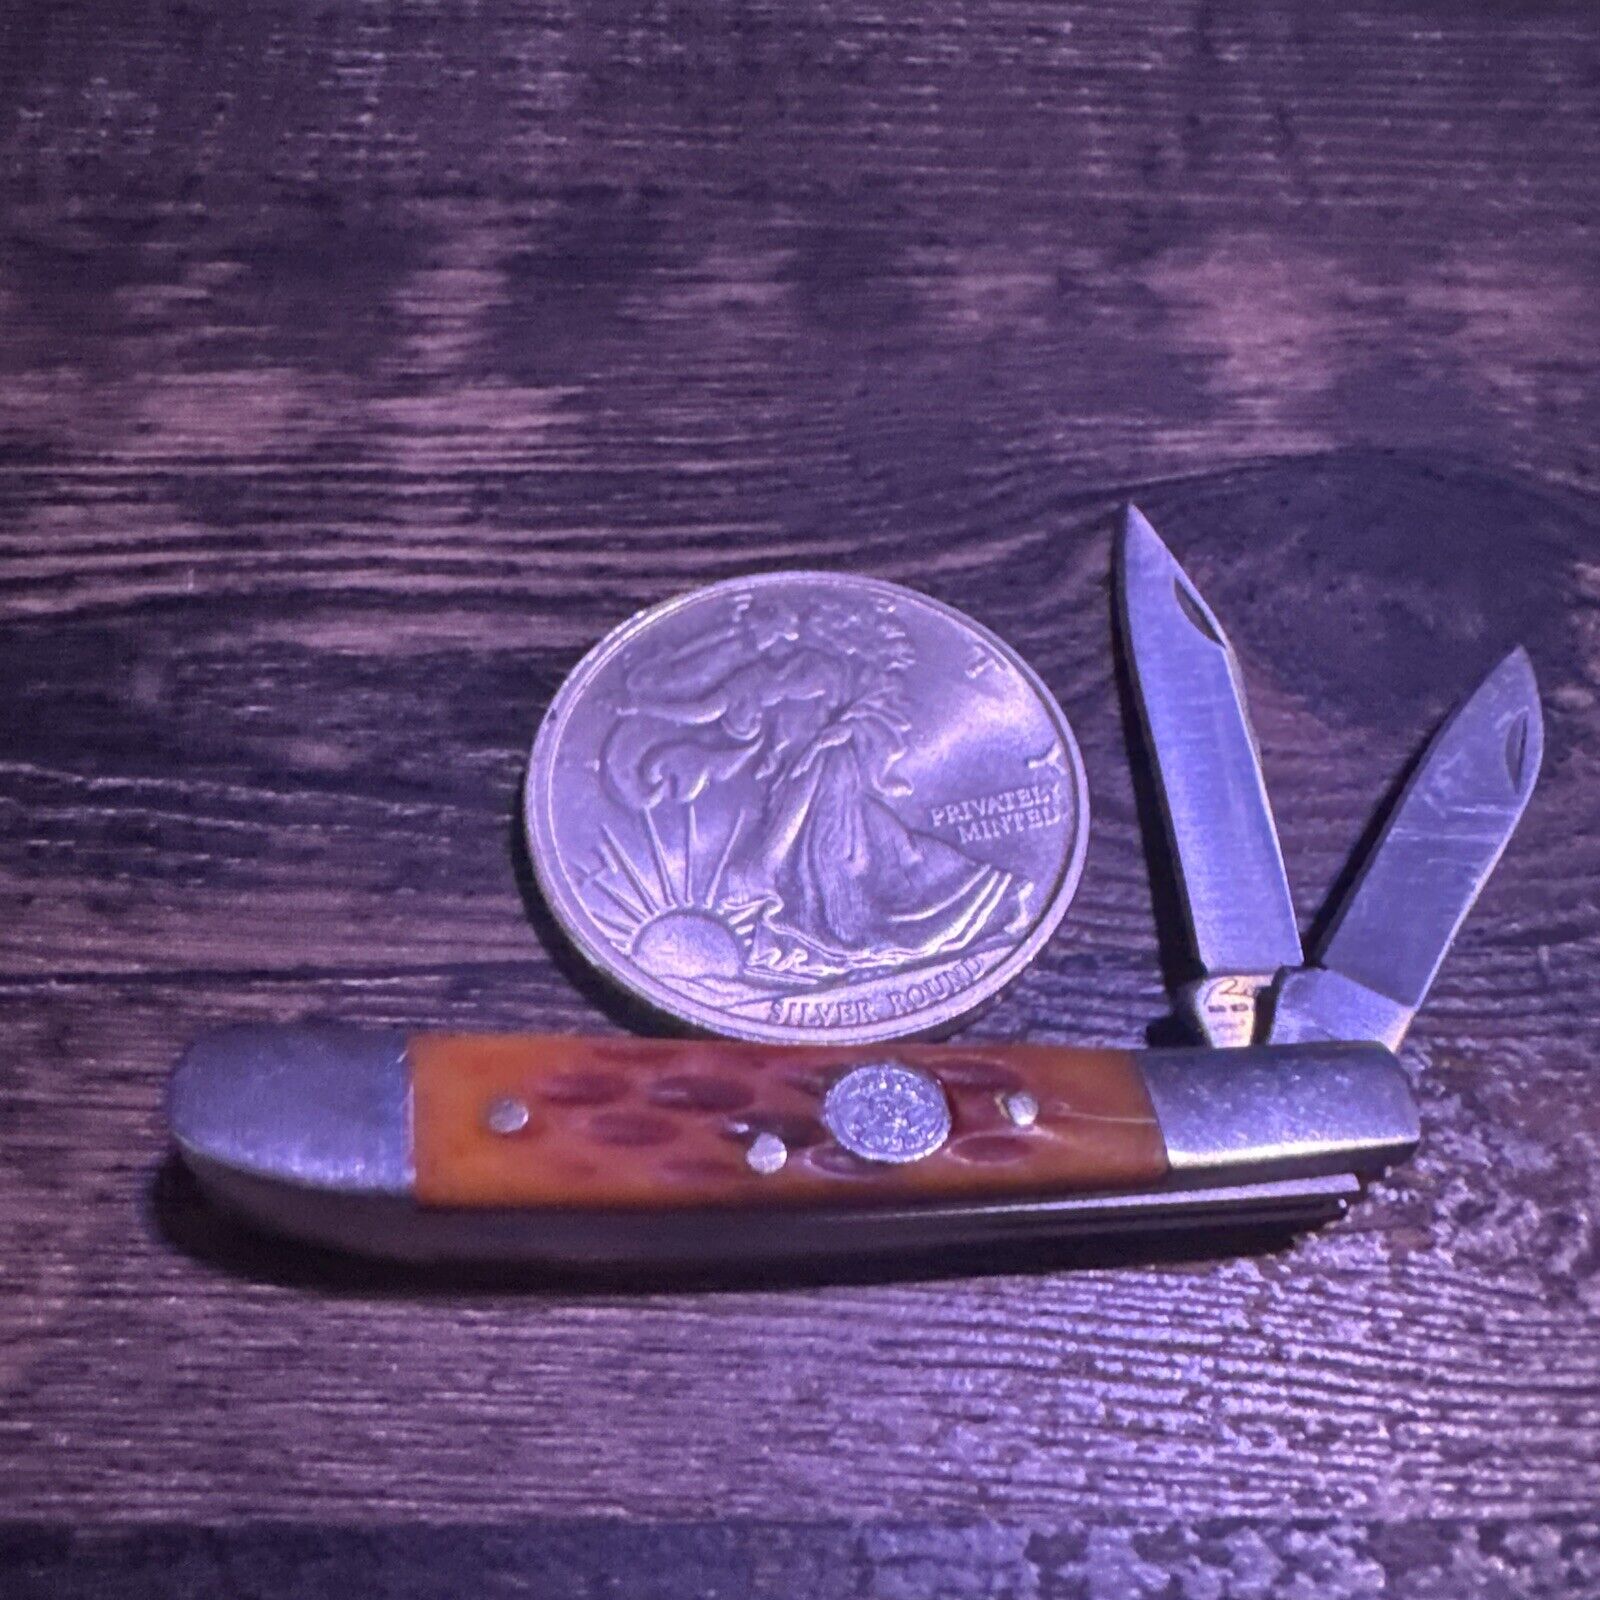 Mini Trapper Pocket Knife - Unknown Maker - Gentlemen’s Knife Stainless 2 Blade